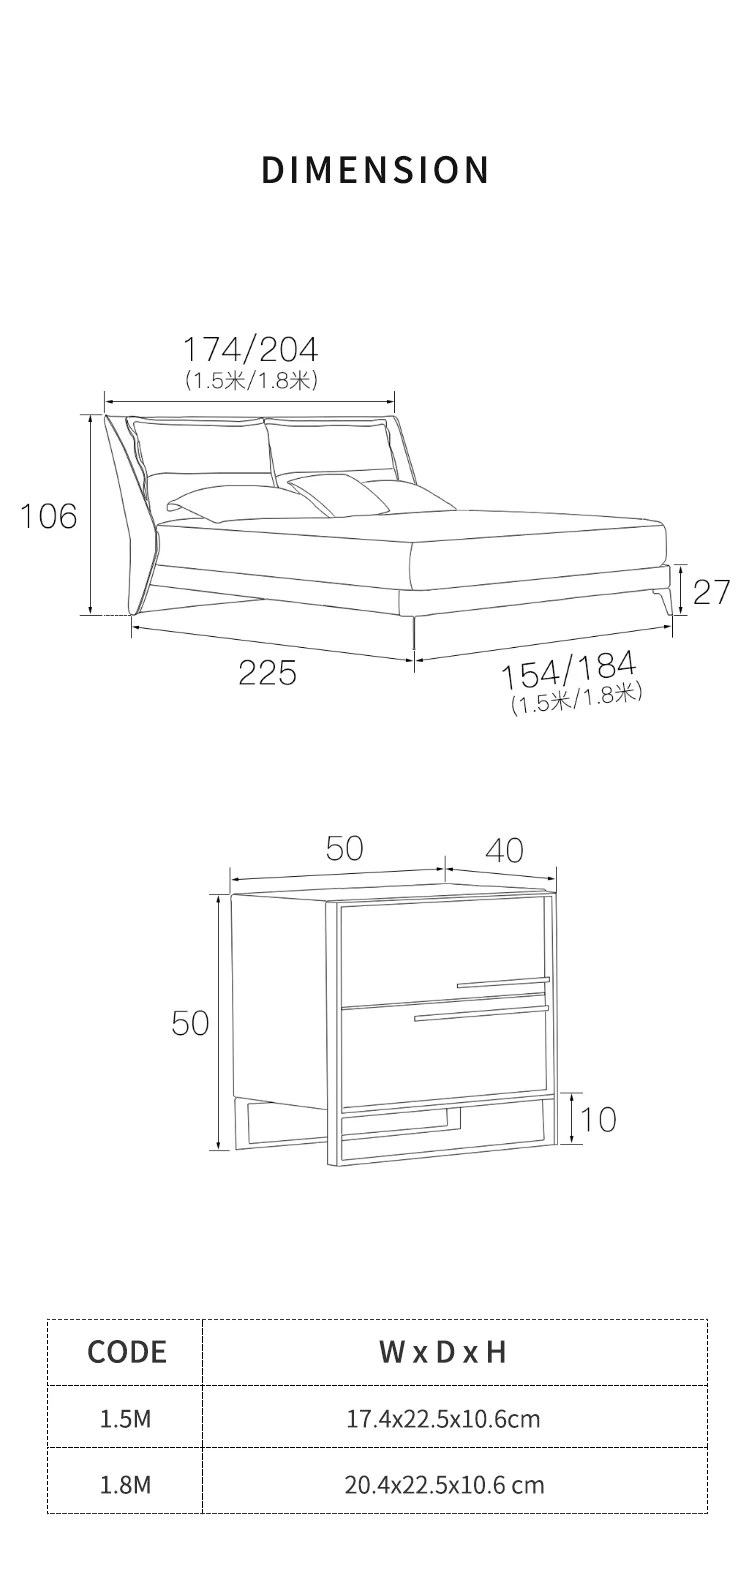 Modern Italian Luxury Bedroom Villa Furniture  Upholstered  King  Queen size Fabric Bed